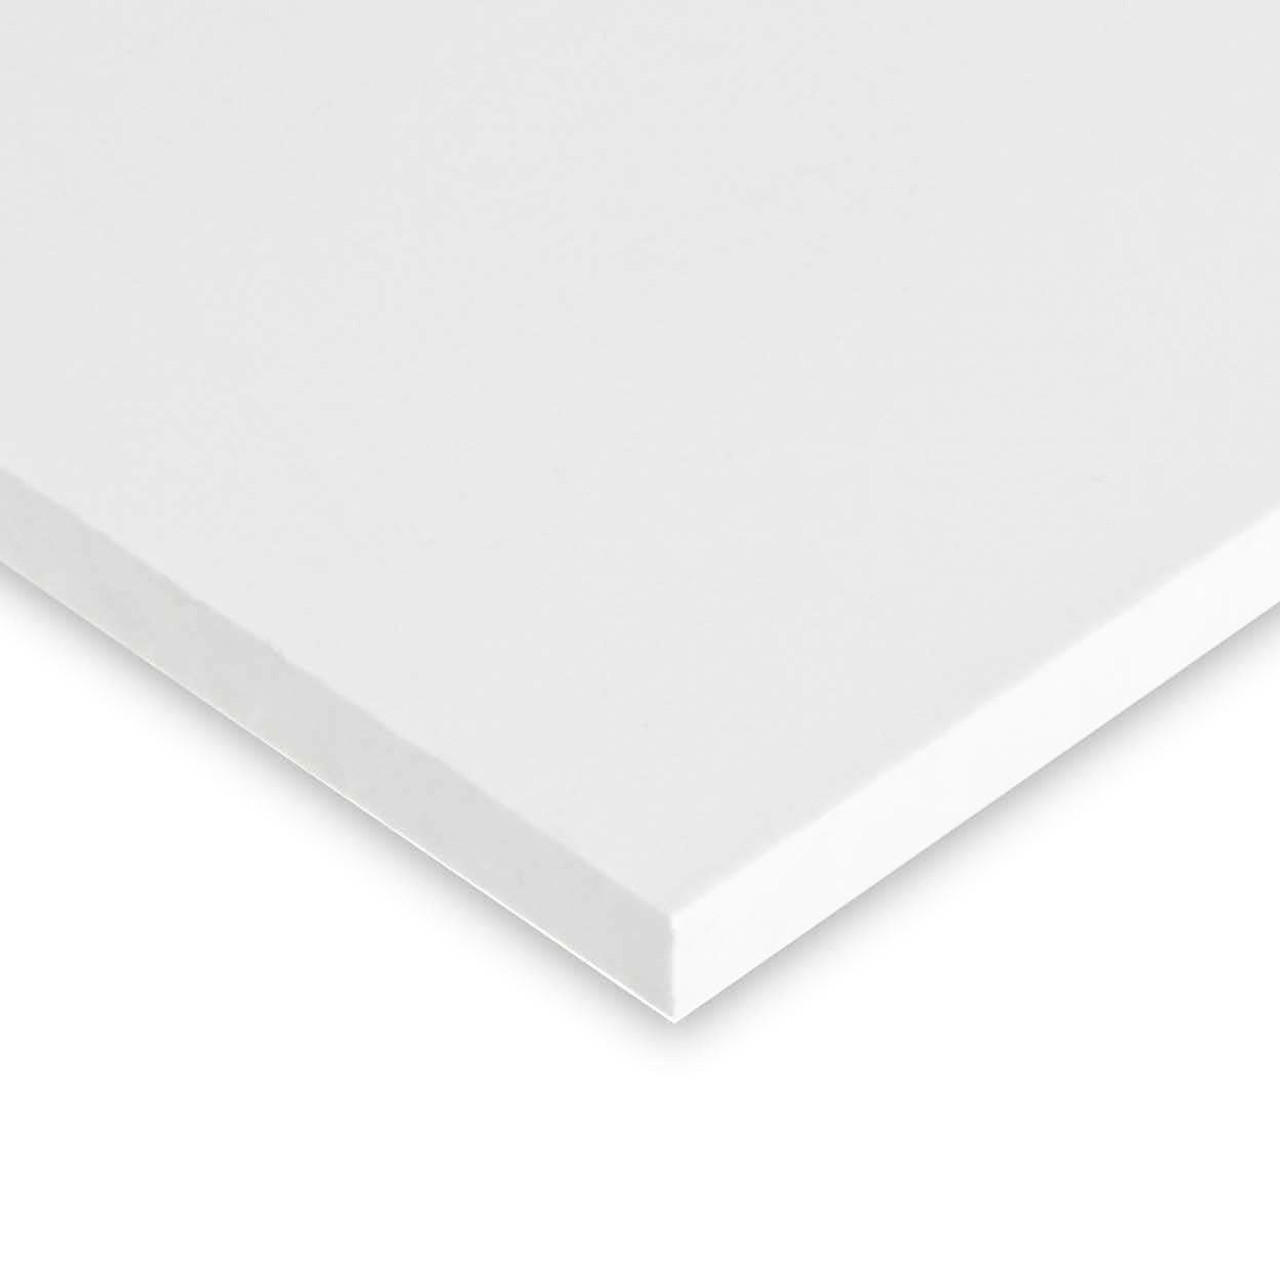 0.472 (1/2 inch) x 12" x 24", PVC Expanded Plastic Sheet, White